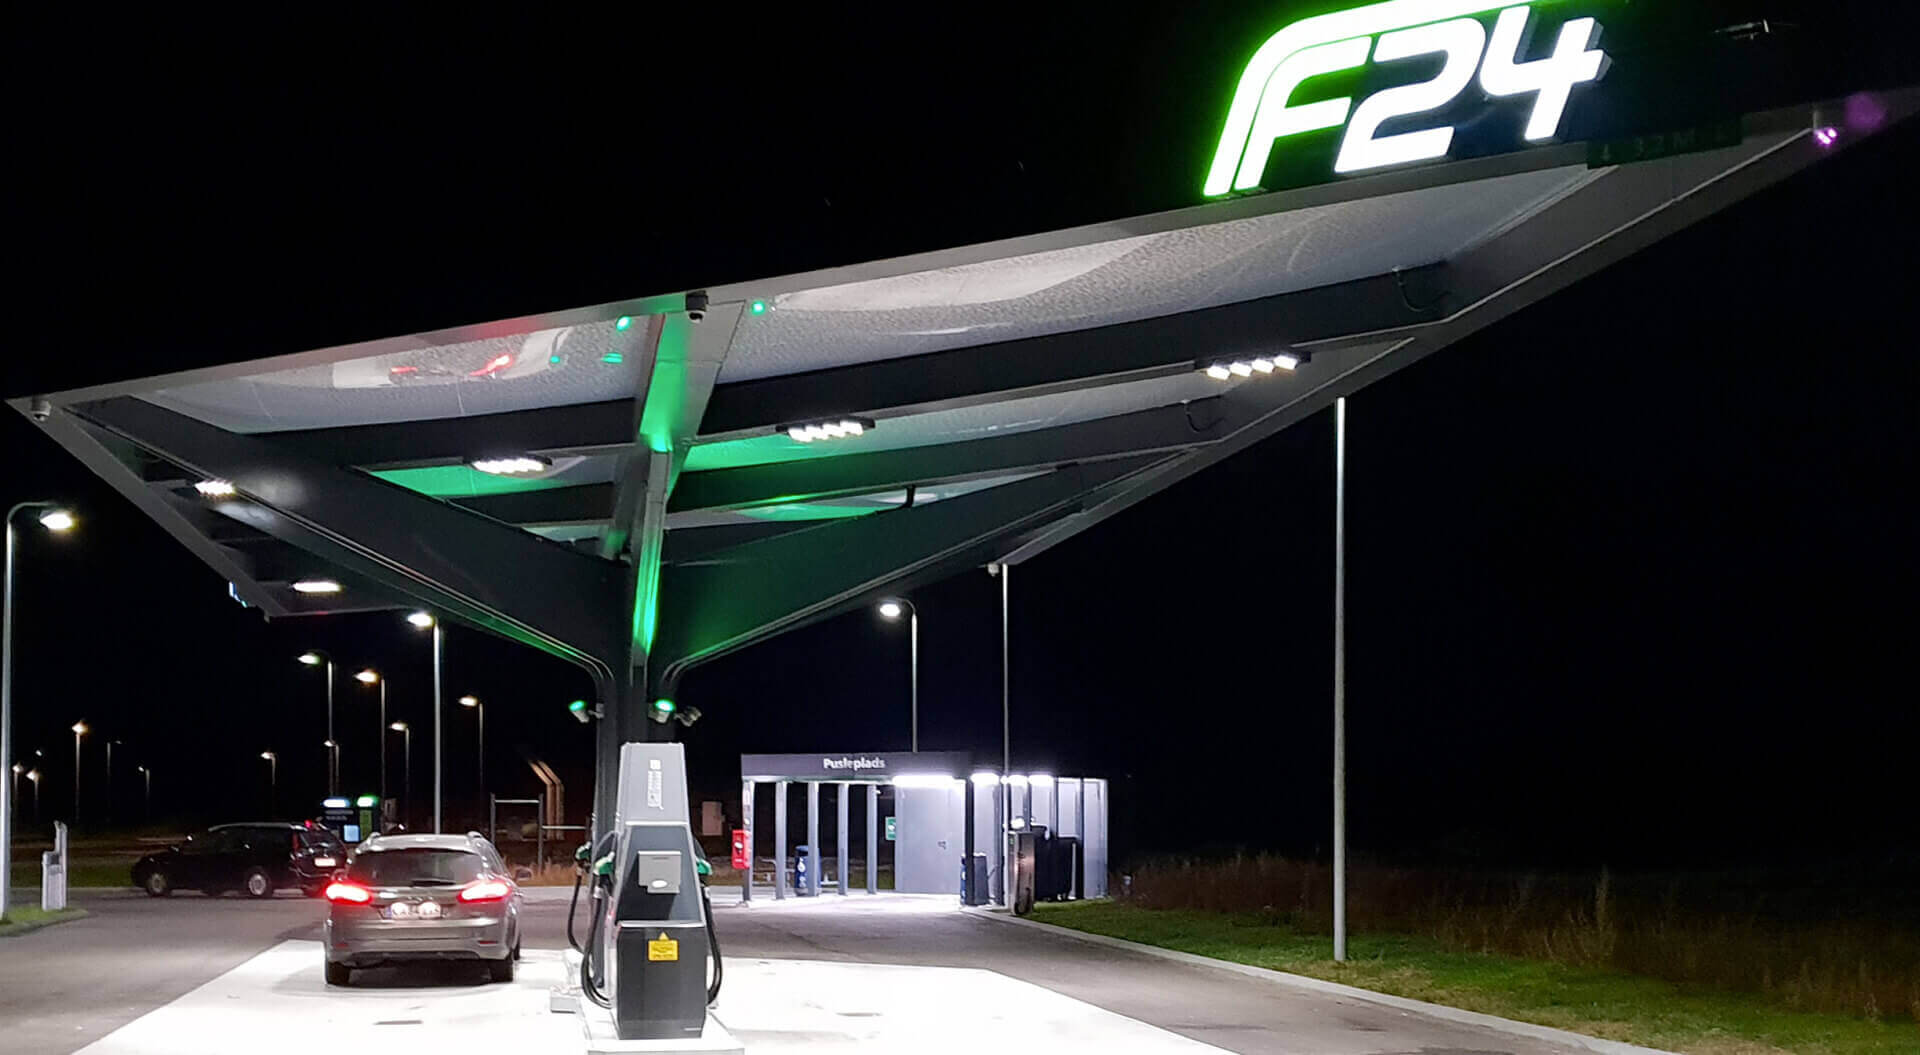 F24 Q8 Self Service Petrol Forecourt Benchmark, Contemporary Architecture, Canopy Design, Graphic Branding, Copenhagen Denmark 2018 - CampbellRigg Agency